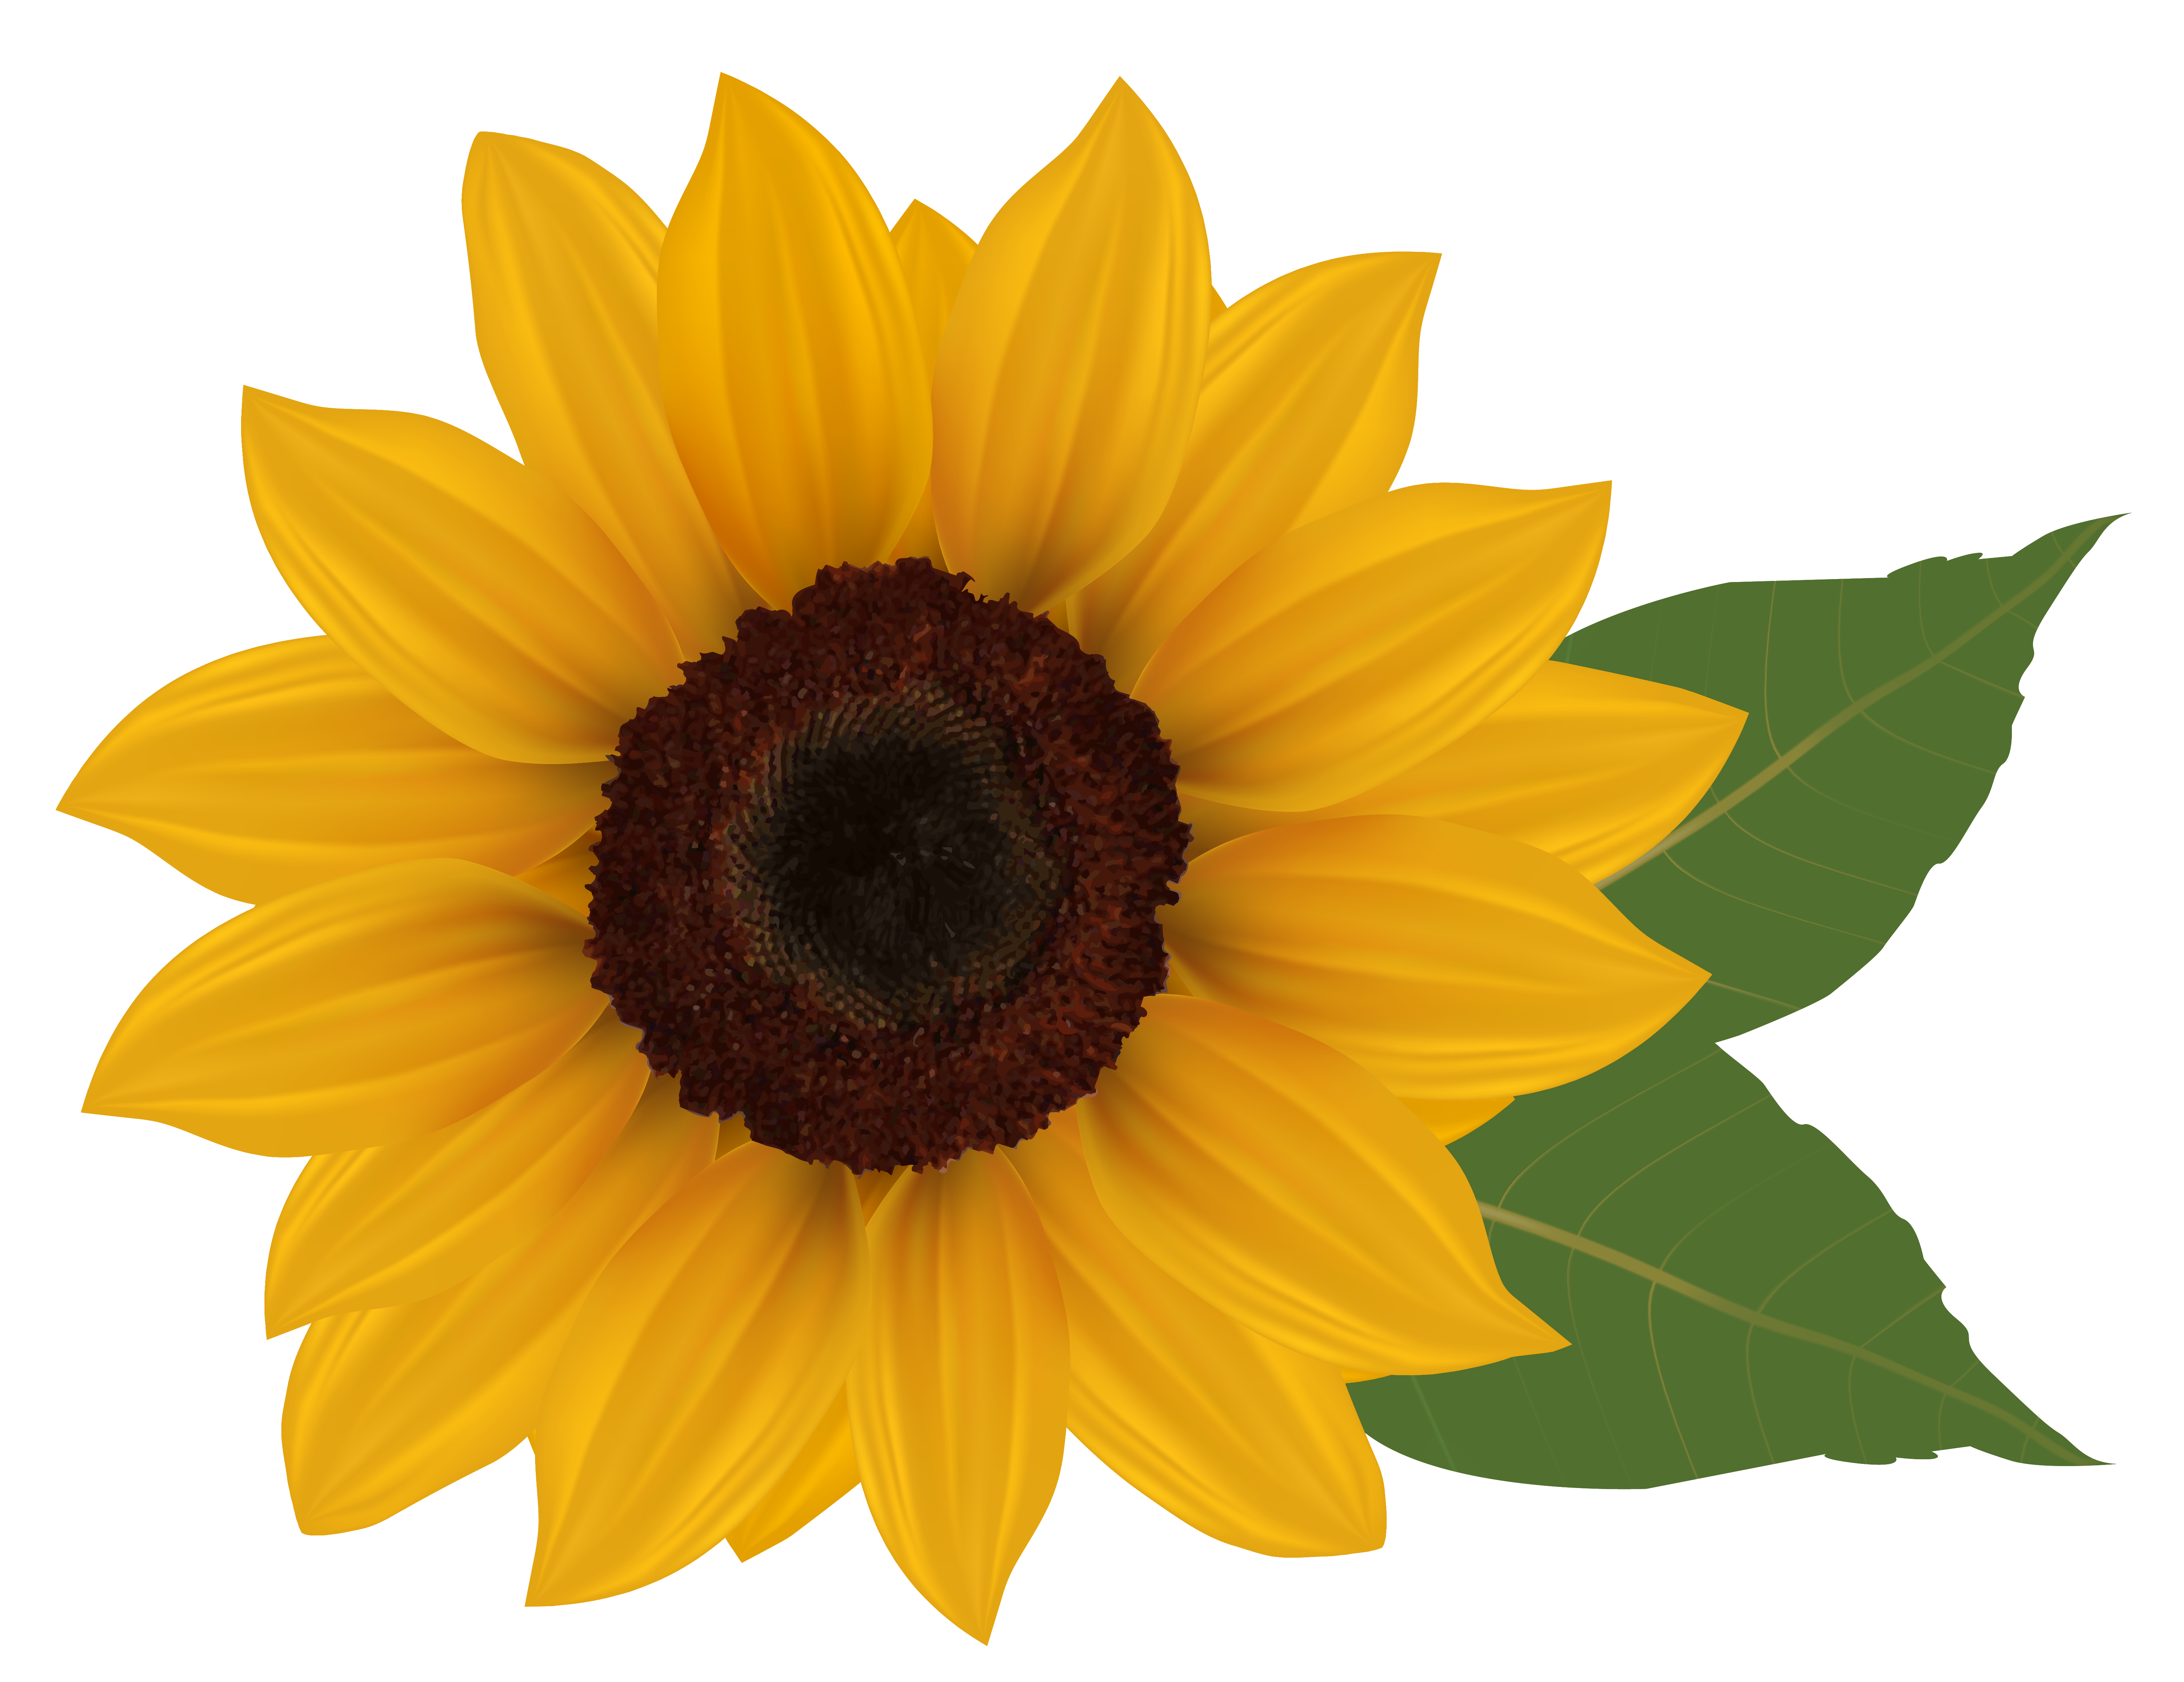 Sunflower clipart 1 image